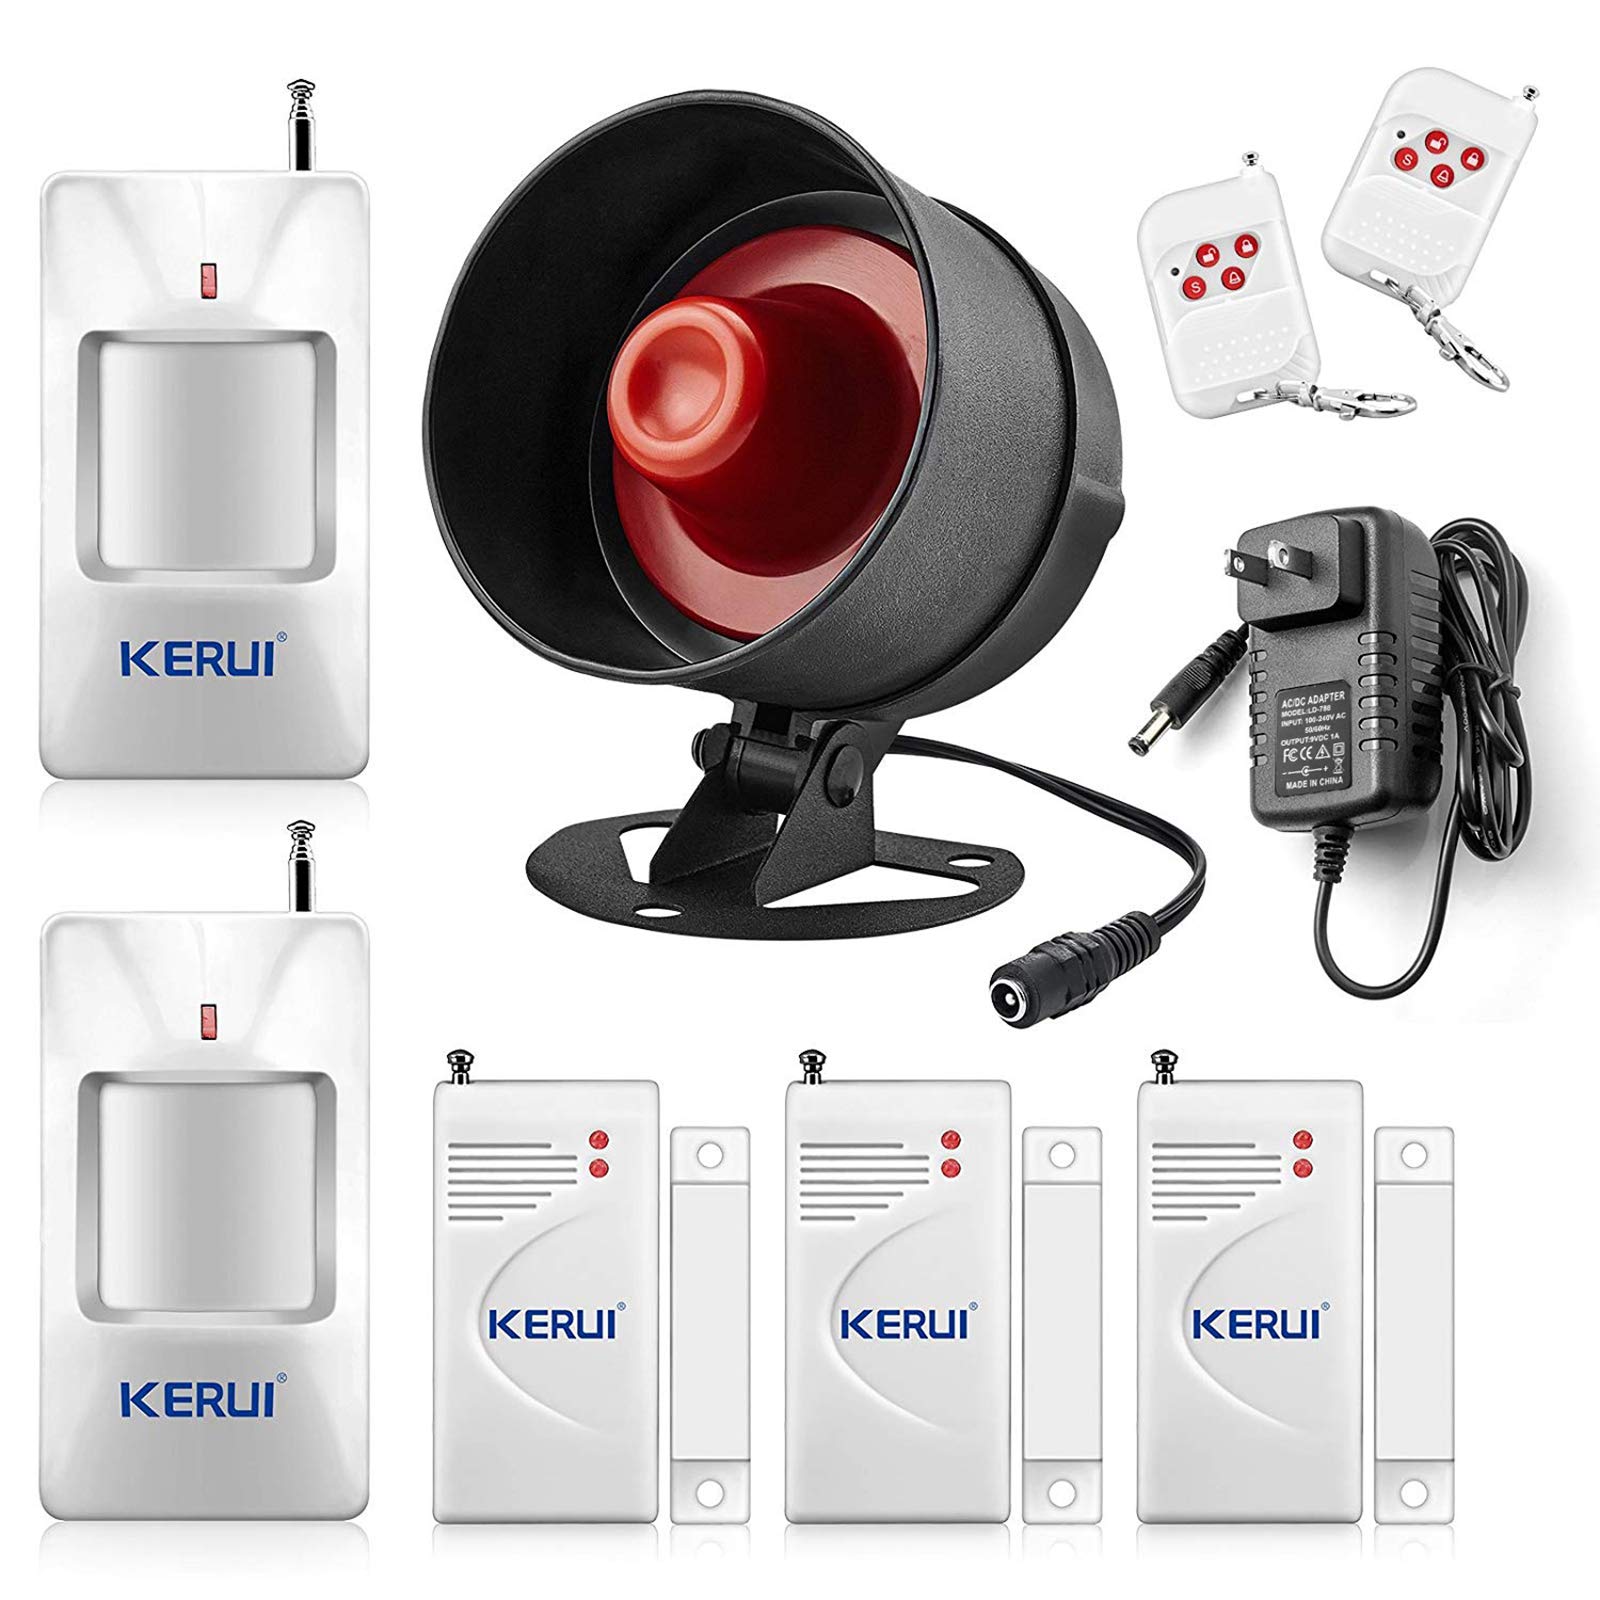 KERUI Upgraded Standalone Home Office Shop Security Alarm System KitWireless Loud IndoorOutdoor Weatherproof Siren Horn with R